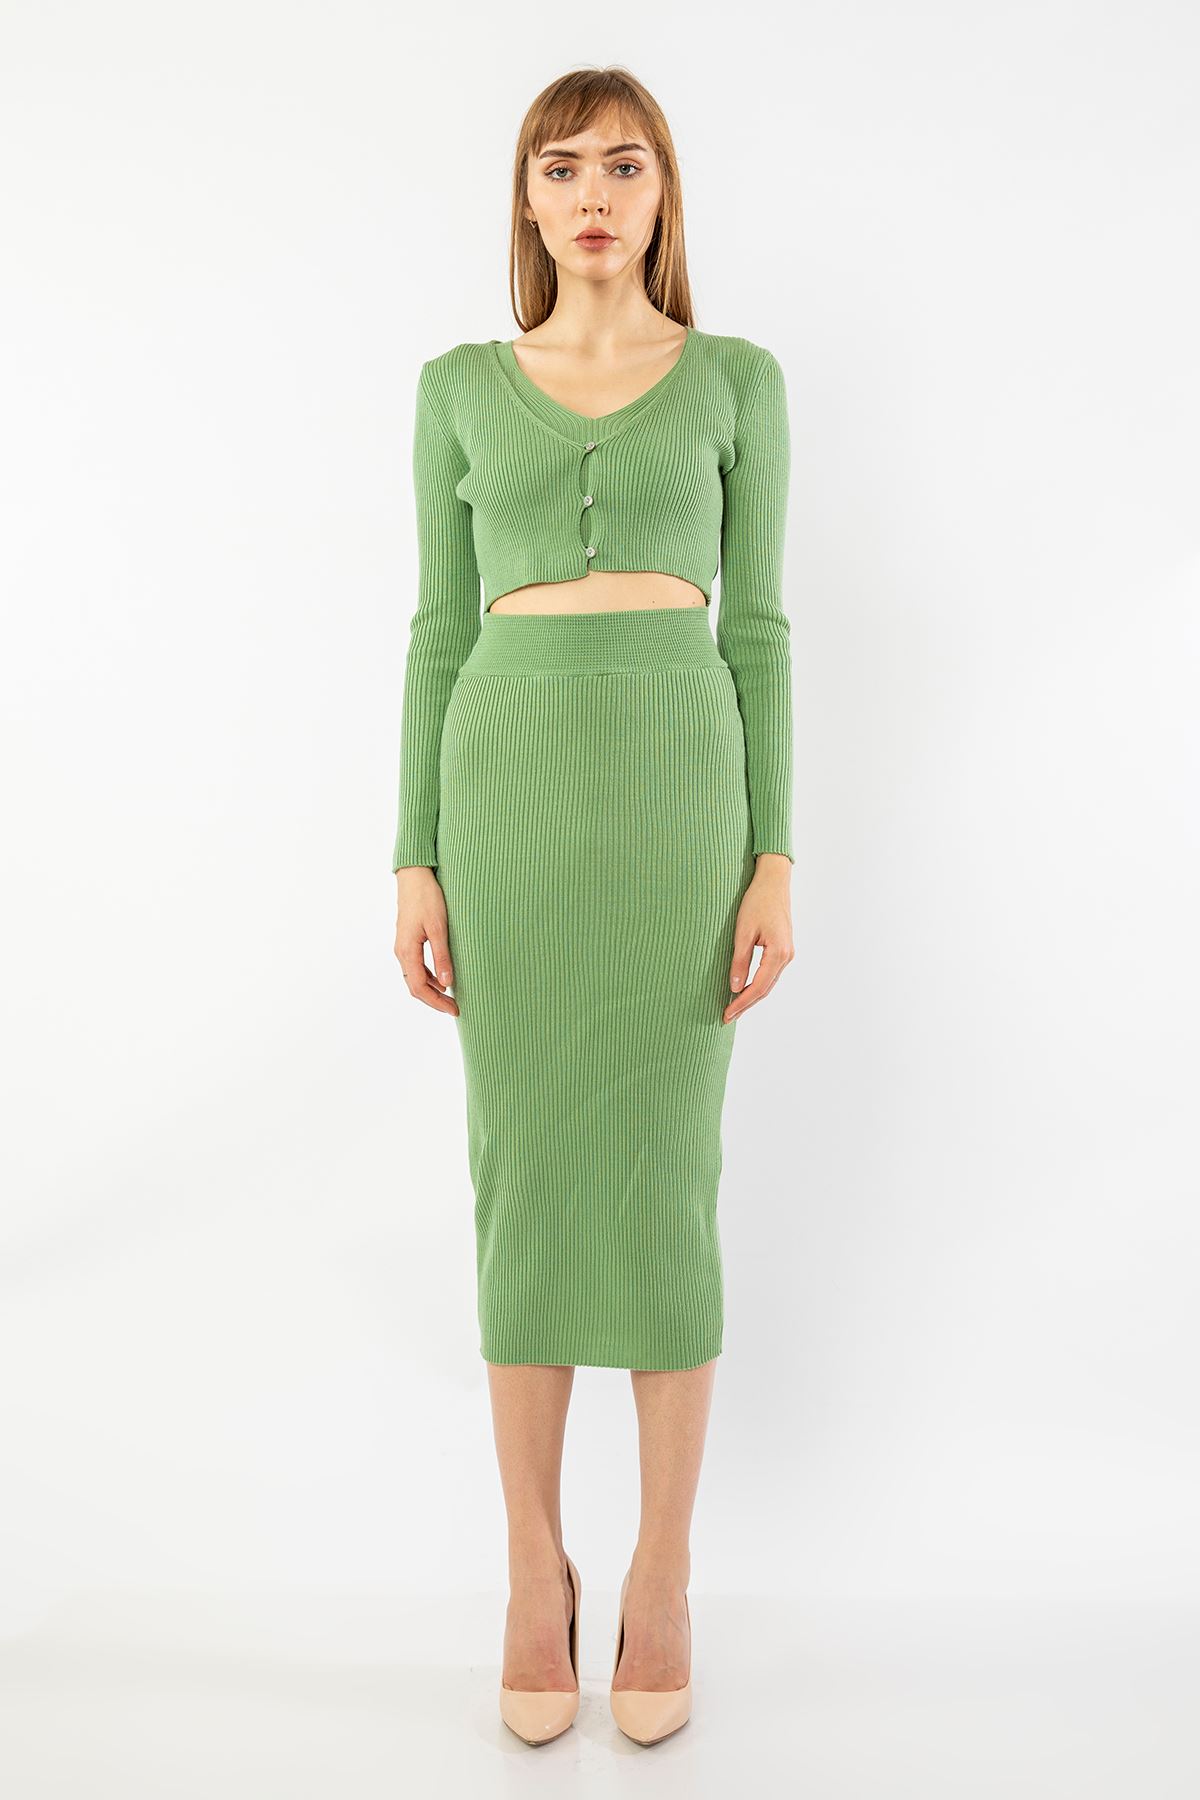 Knitwear Fabric Long Sleeve U-Neck Tight Fit Women'S Set - Mustard Green